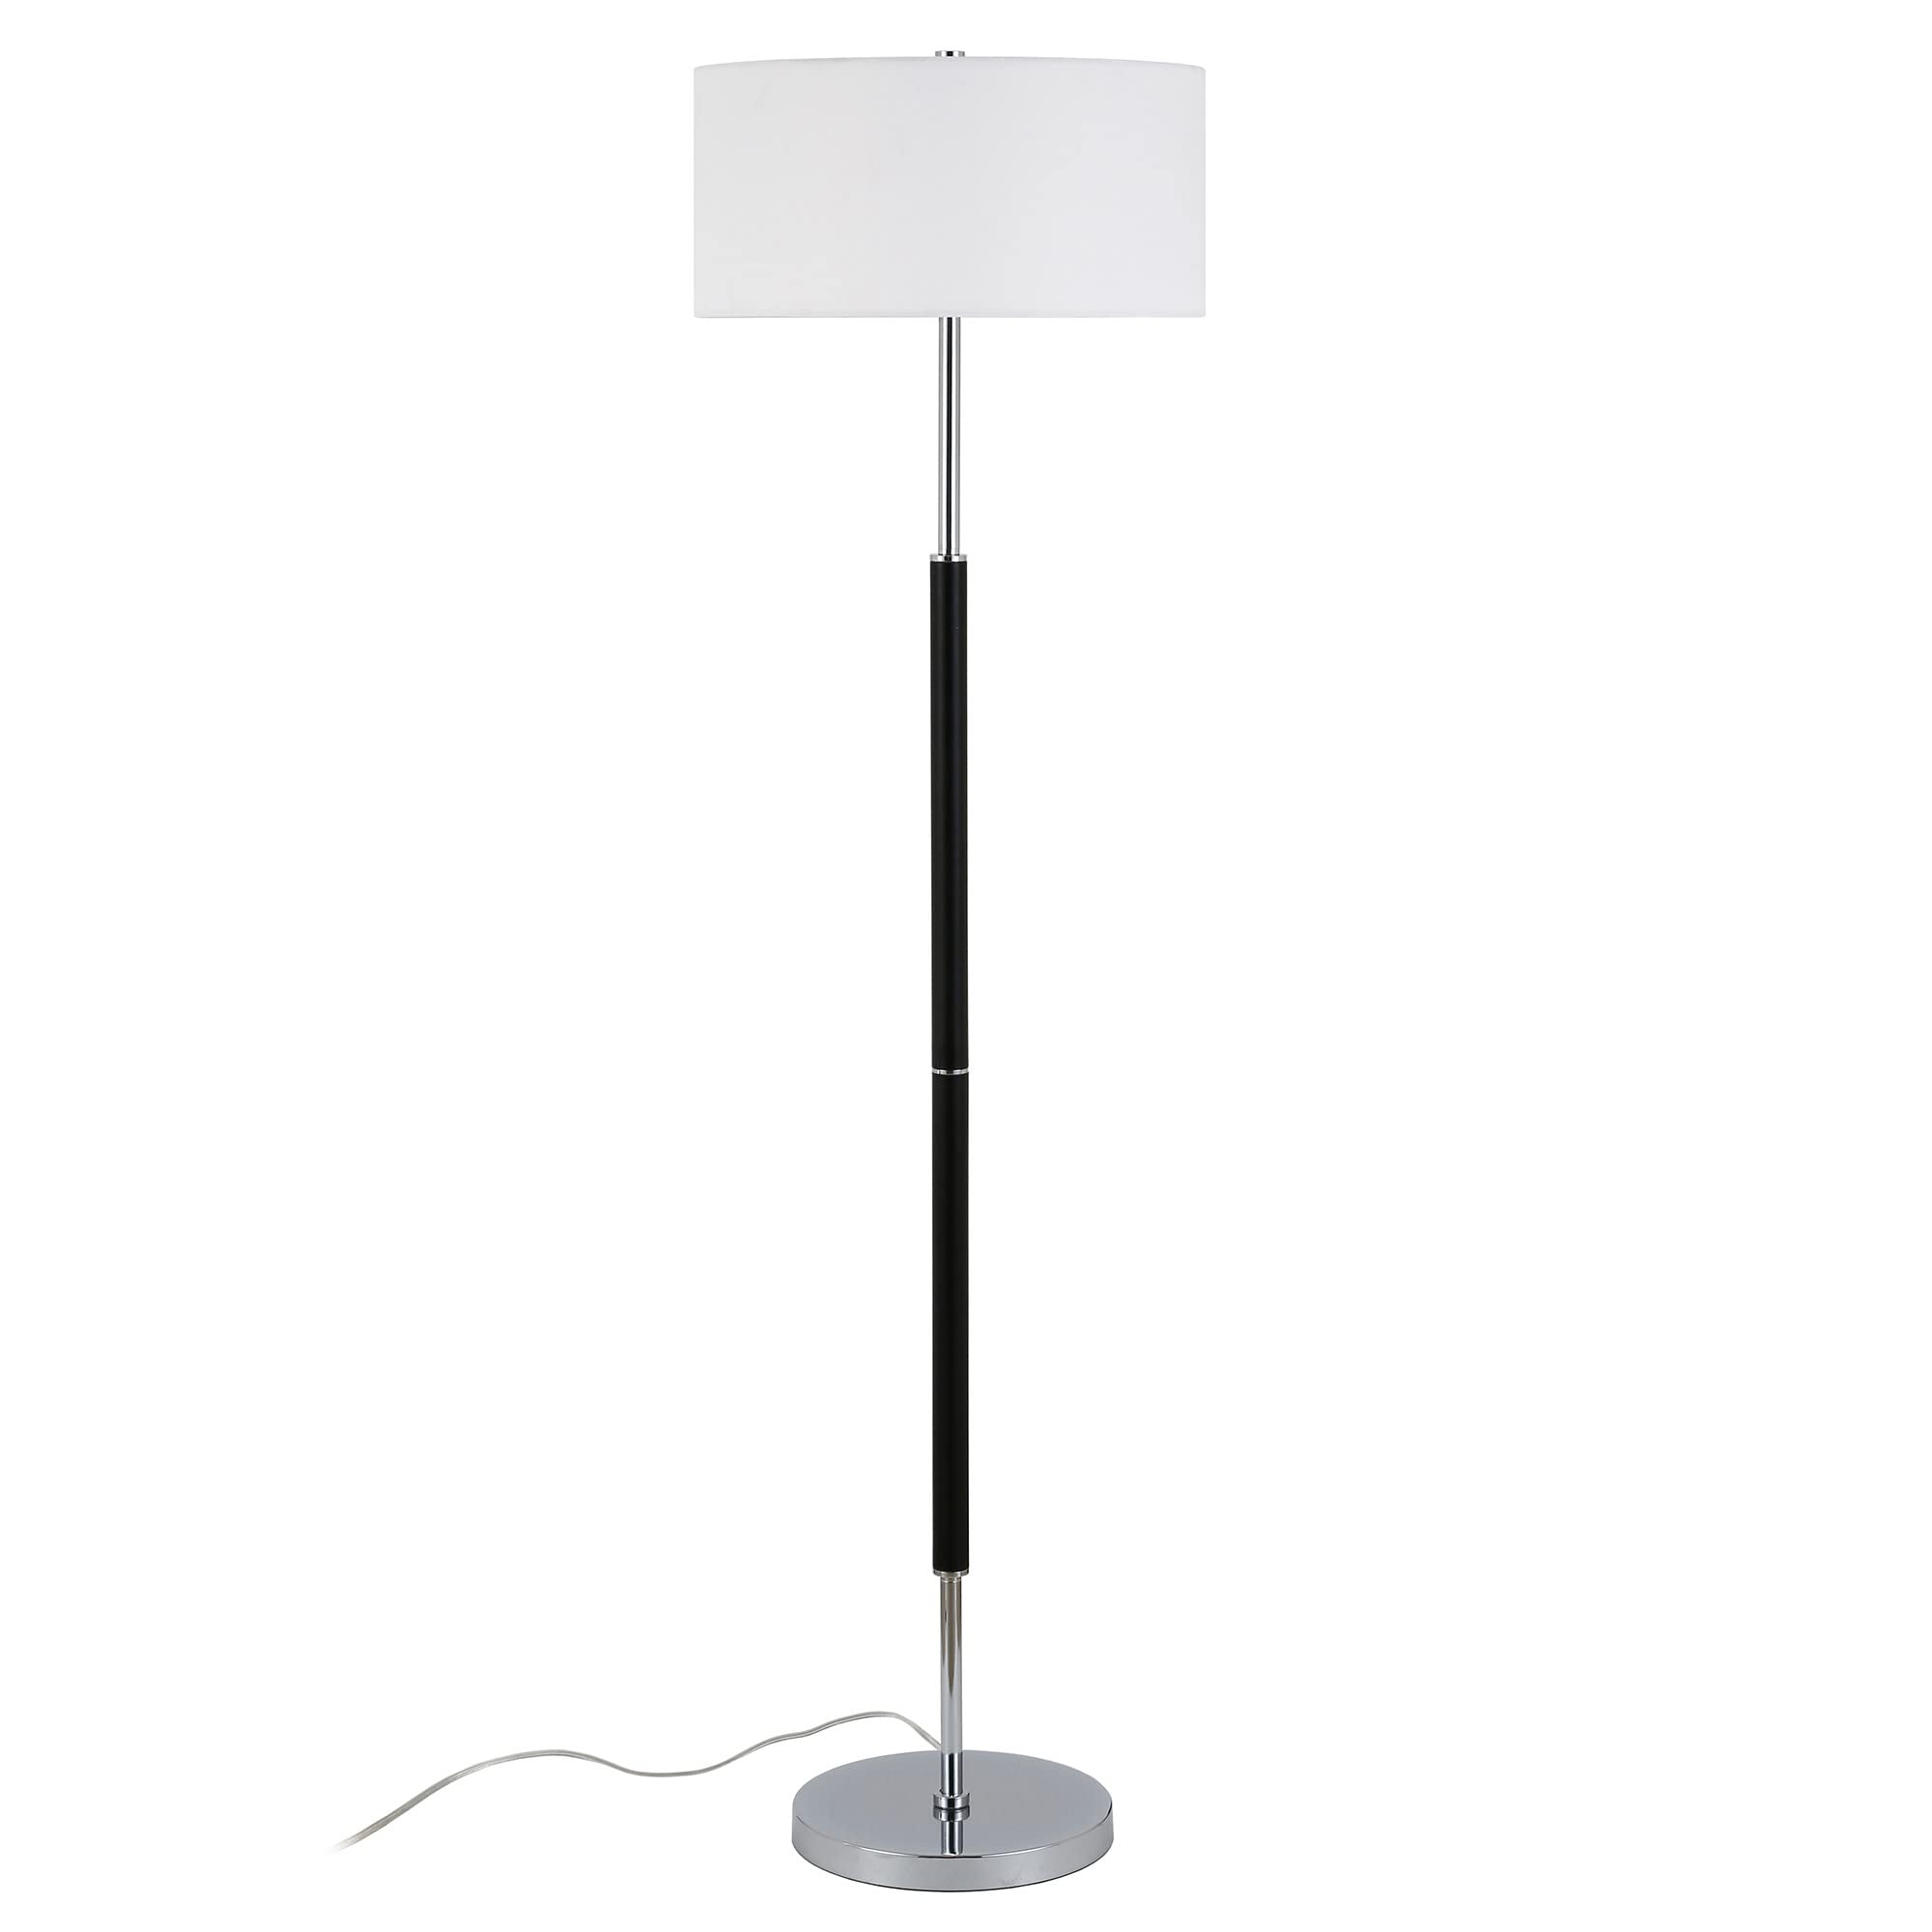 Henn&Hart 2-Light Floor Lamp with Fabric Shade in Matte Black/Polished Nickel/White, Floor Lamp for Home Office, Bedroom, Living Room